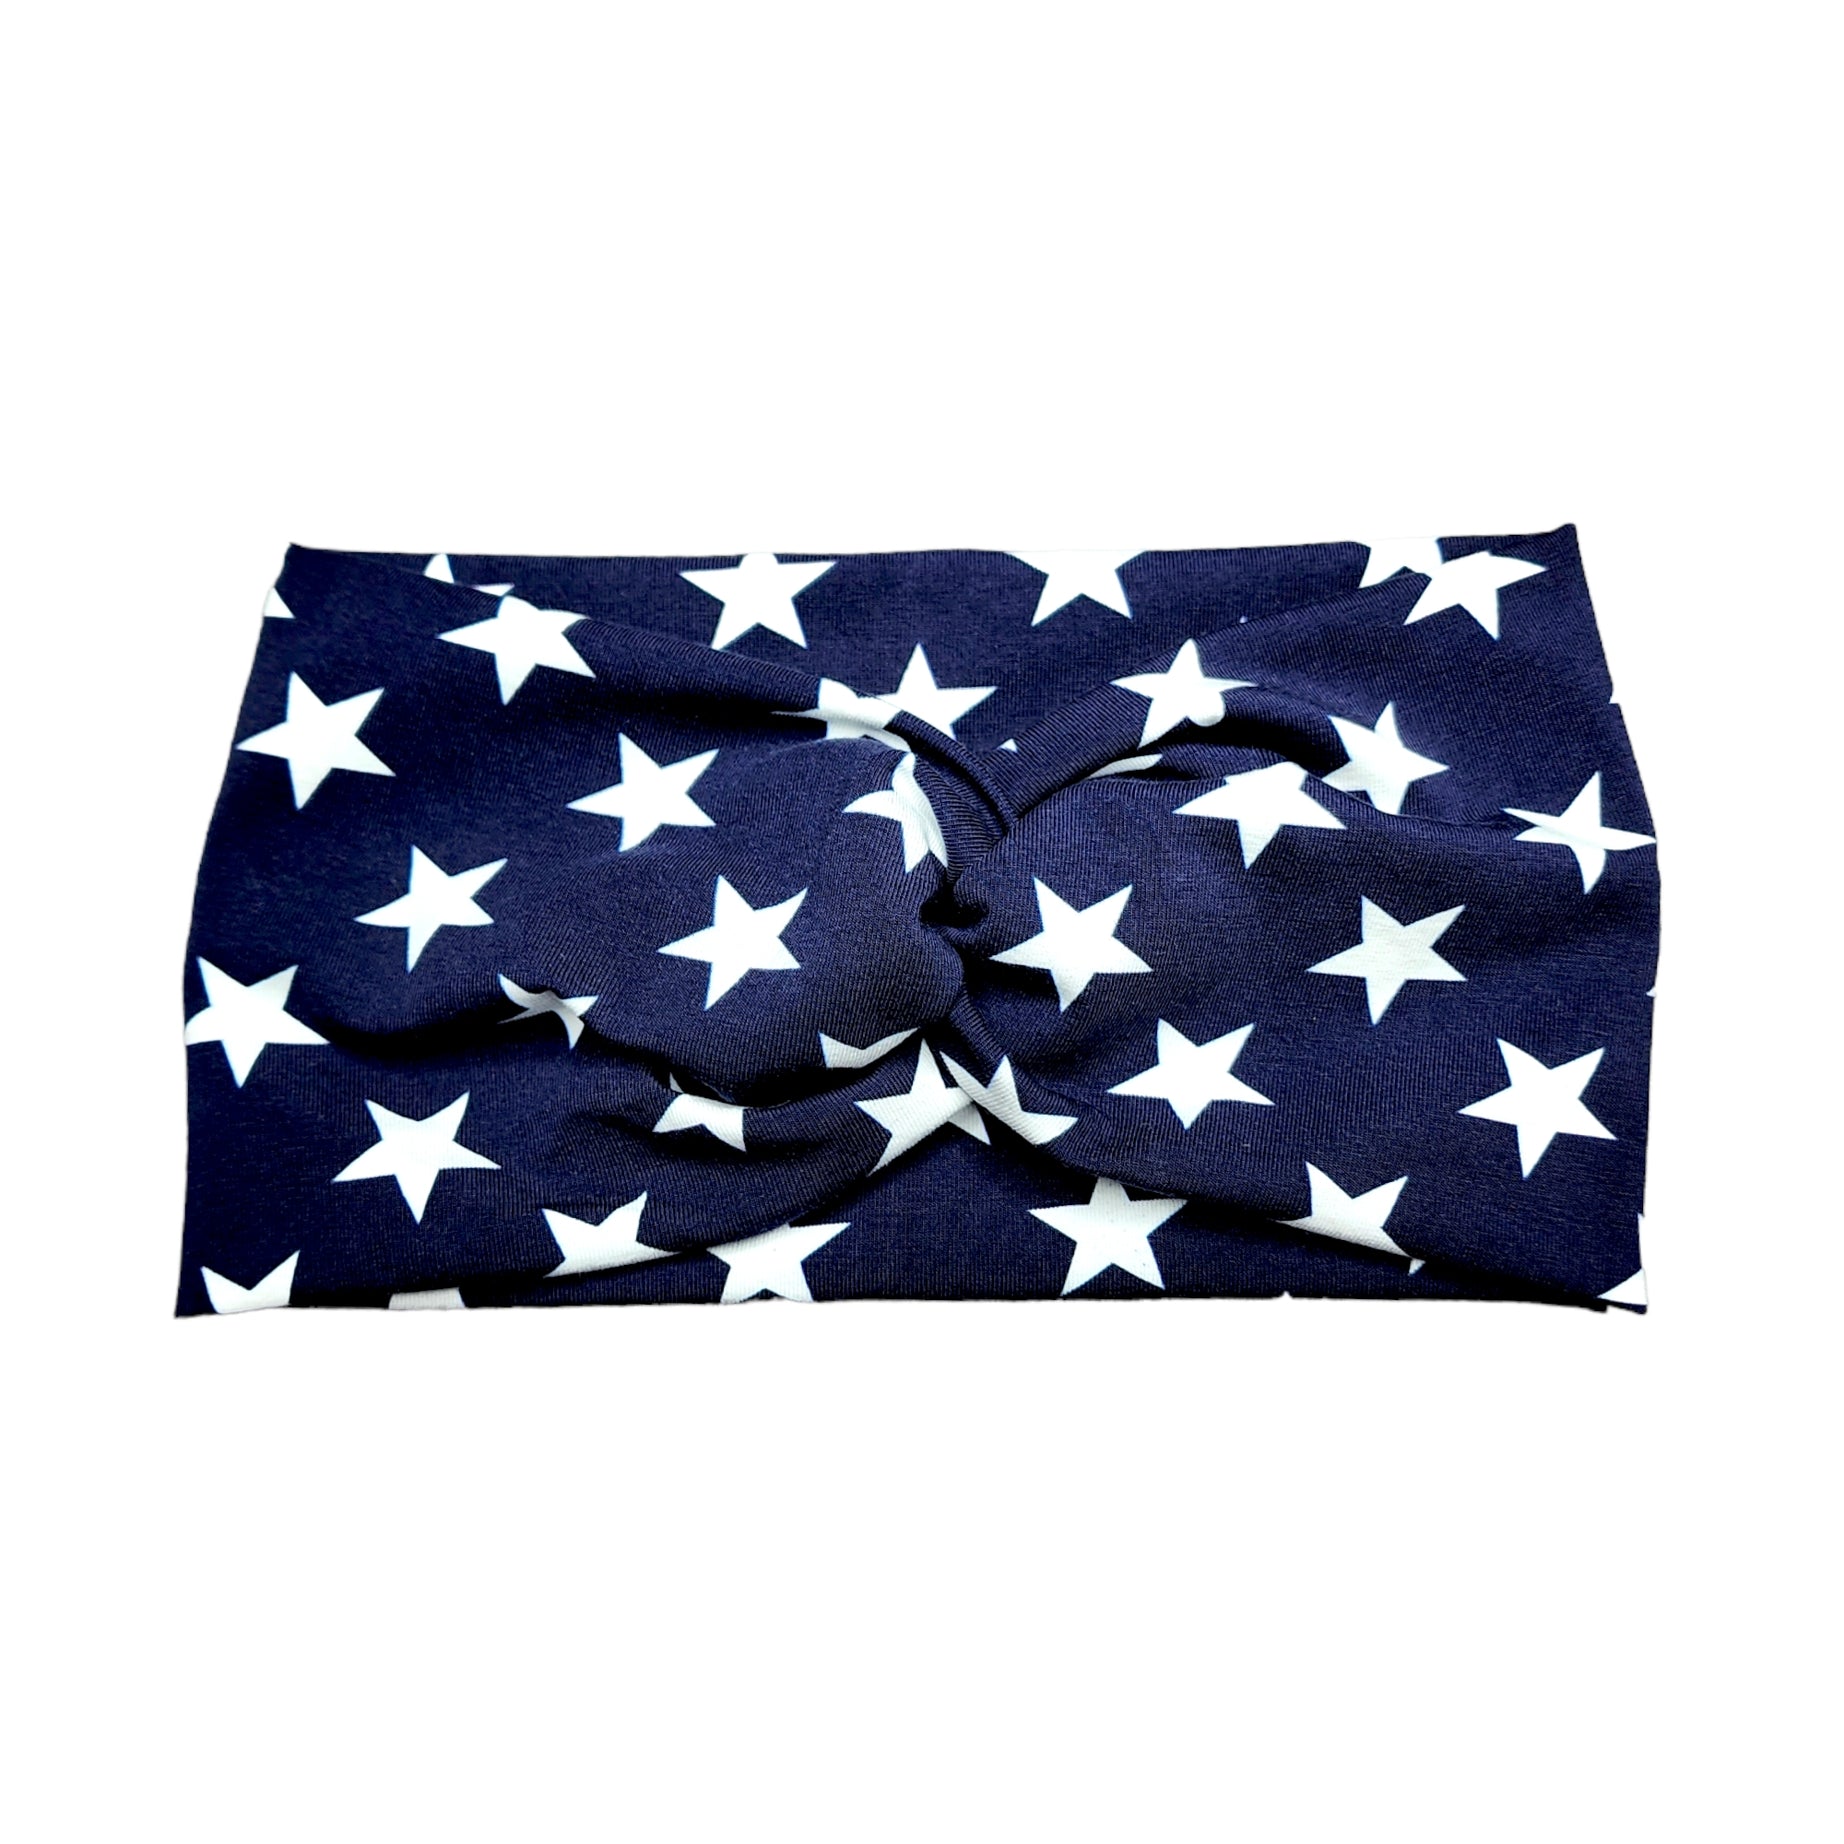 Wide Navy Blue Star Print Headband for Women